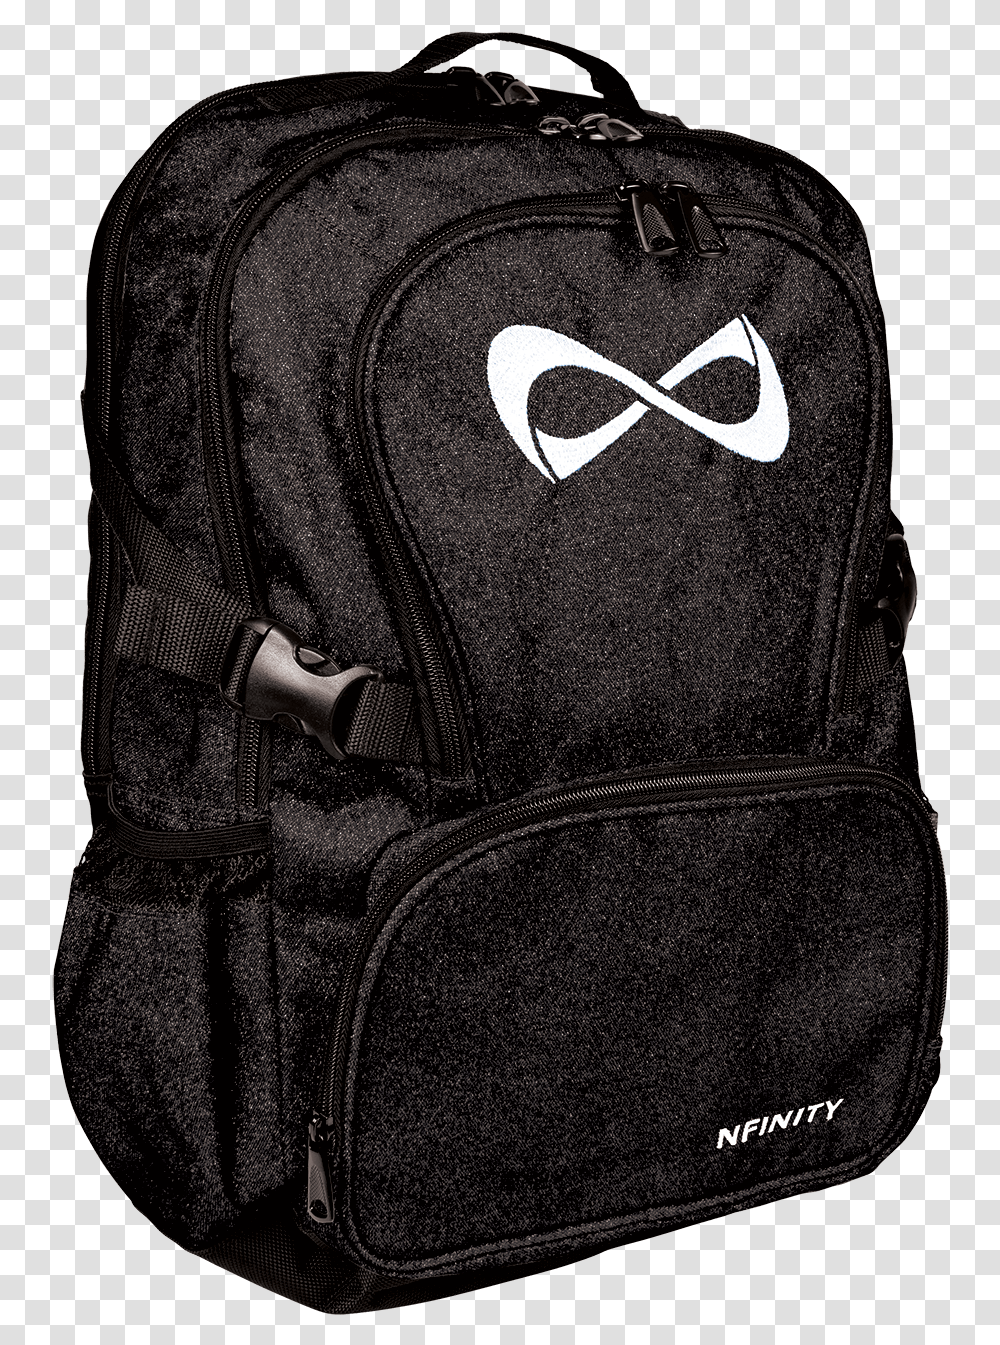 Nfinity Sparkle Backpack Nfinity Backpack, Bag, Luggage Transparent Png